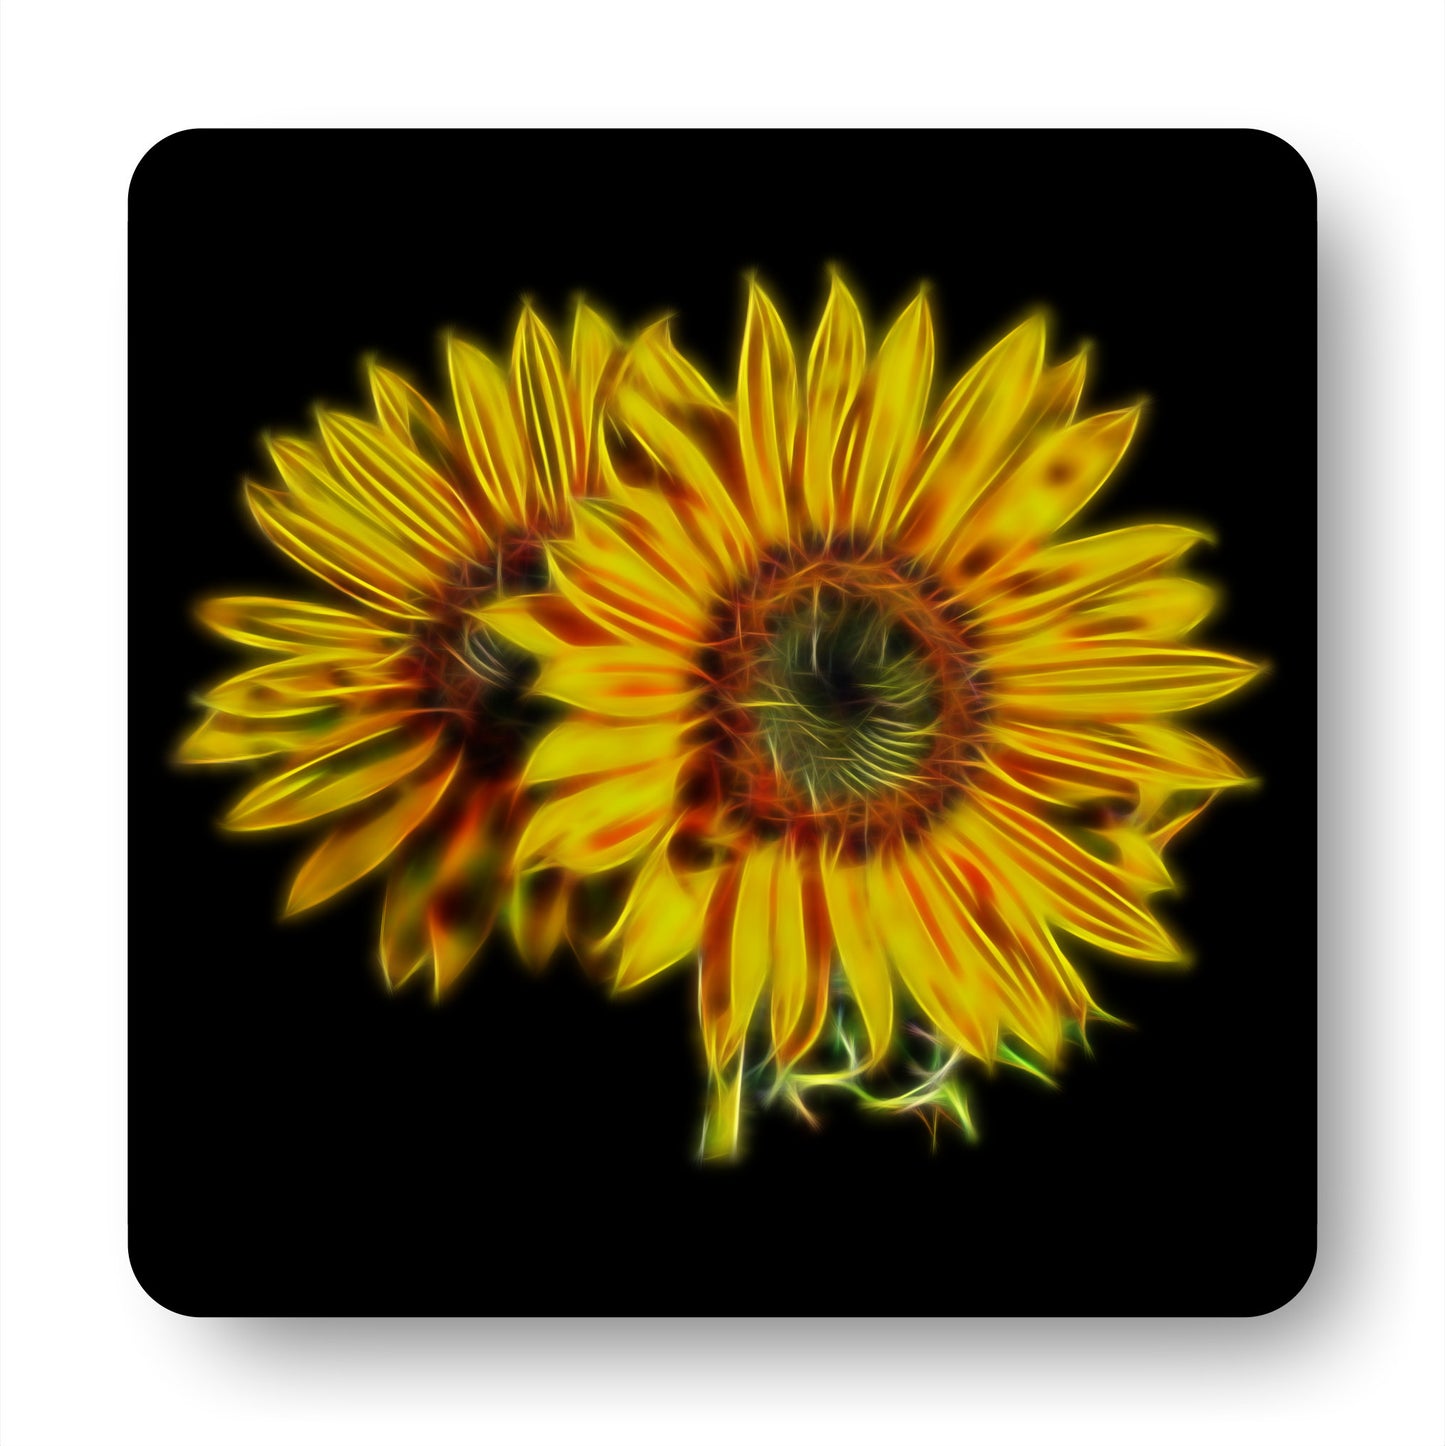 Sunflower Coasters with Stunning Fractal Art Design.